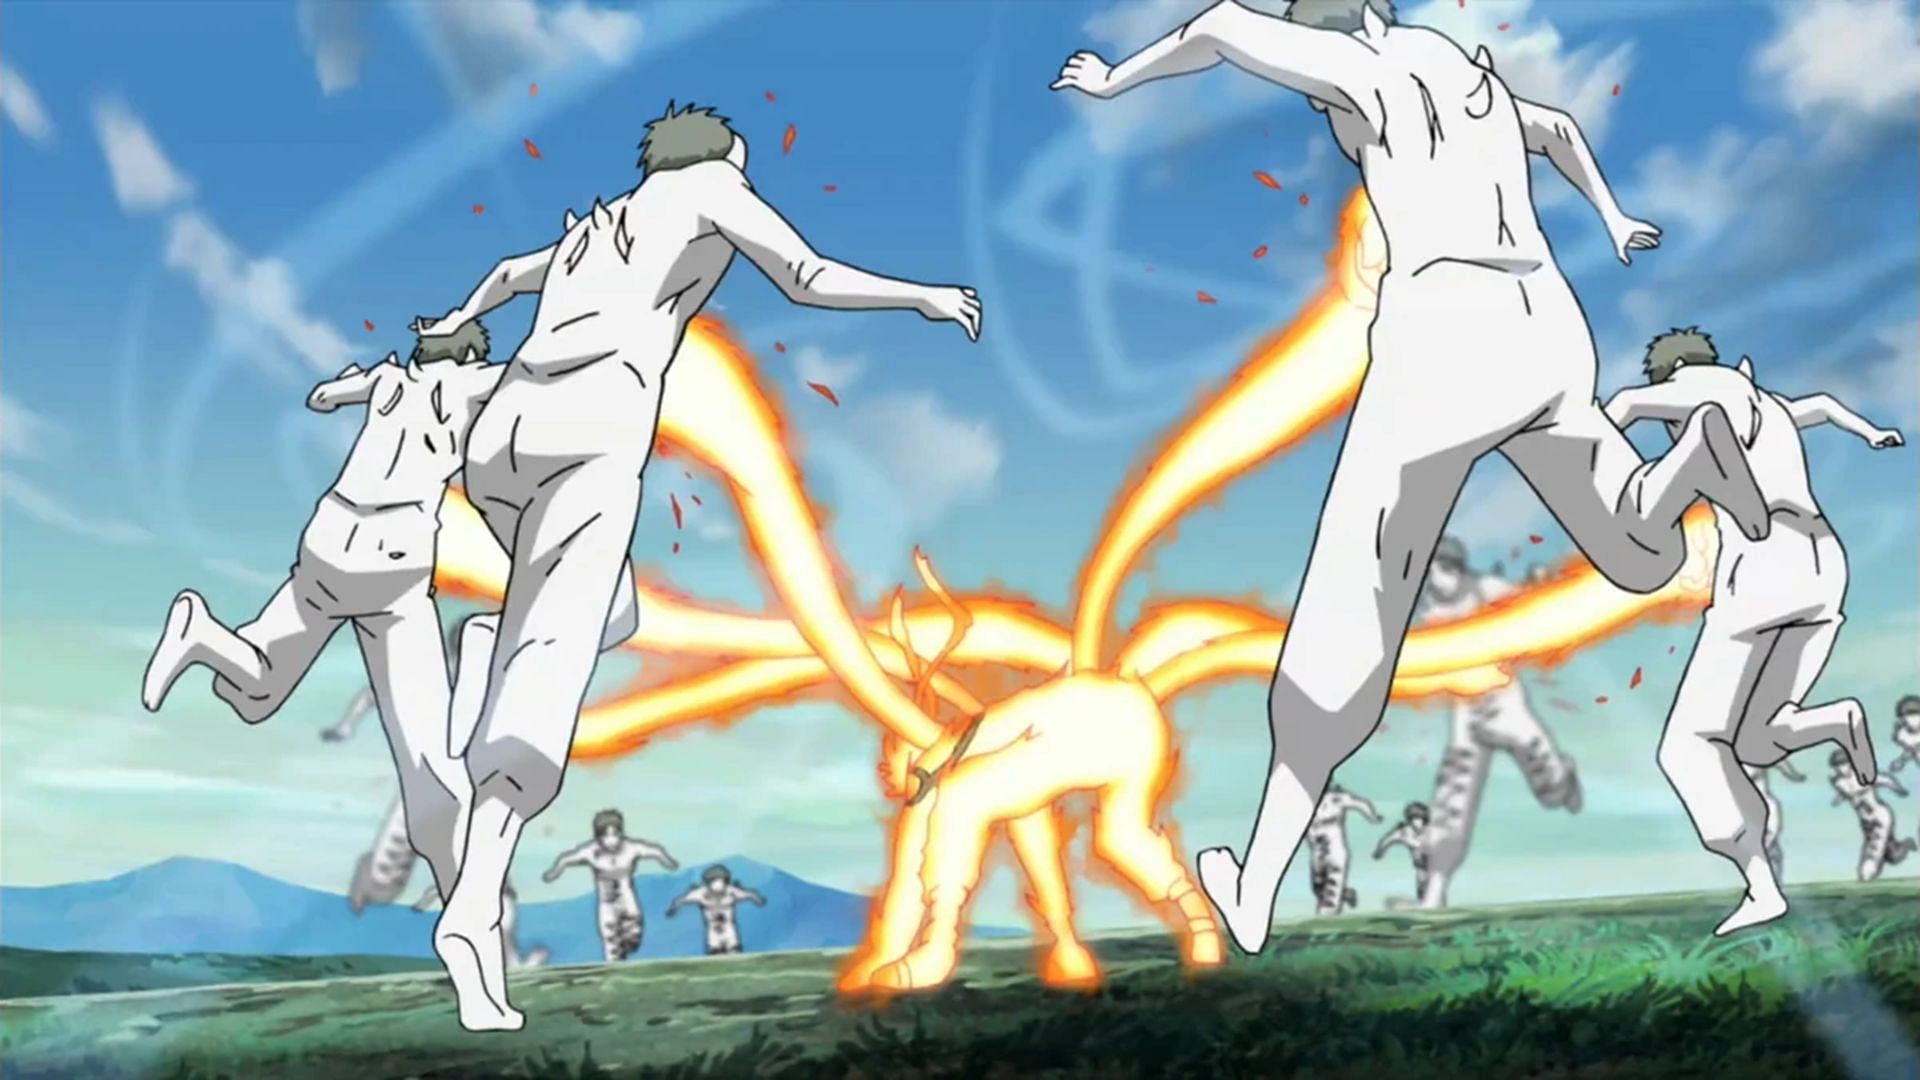 Naruto enters the battlefield (Image via Studio Pierrot)